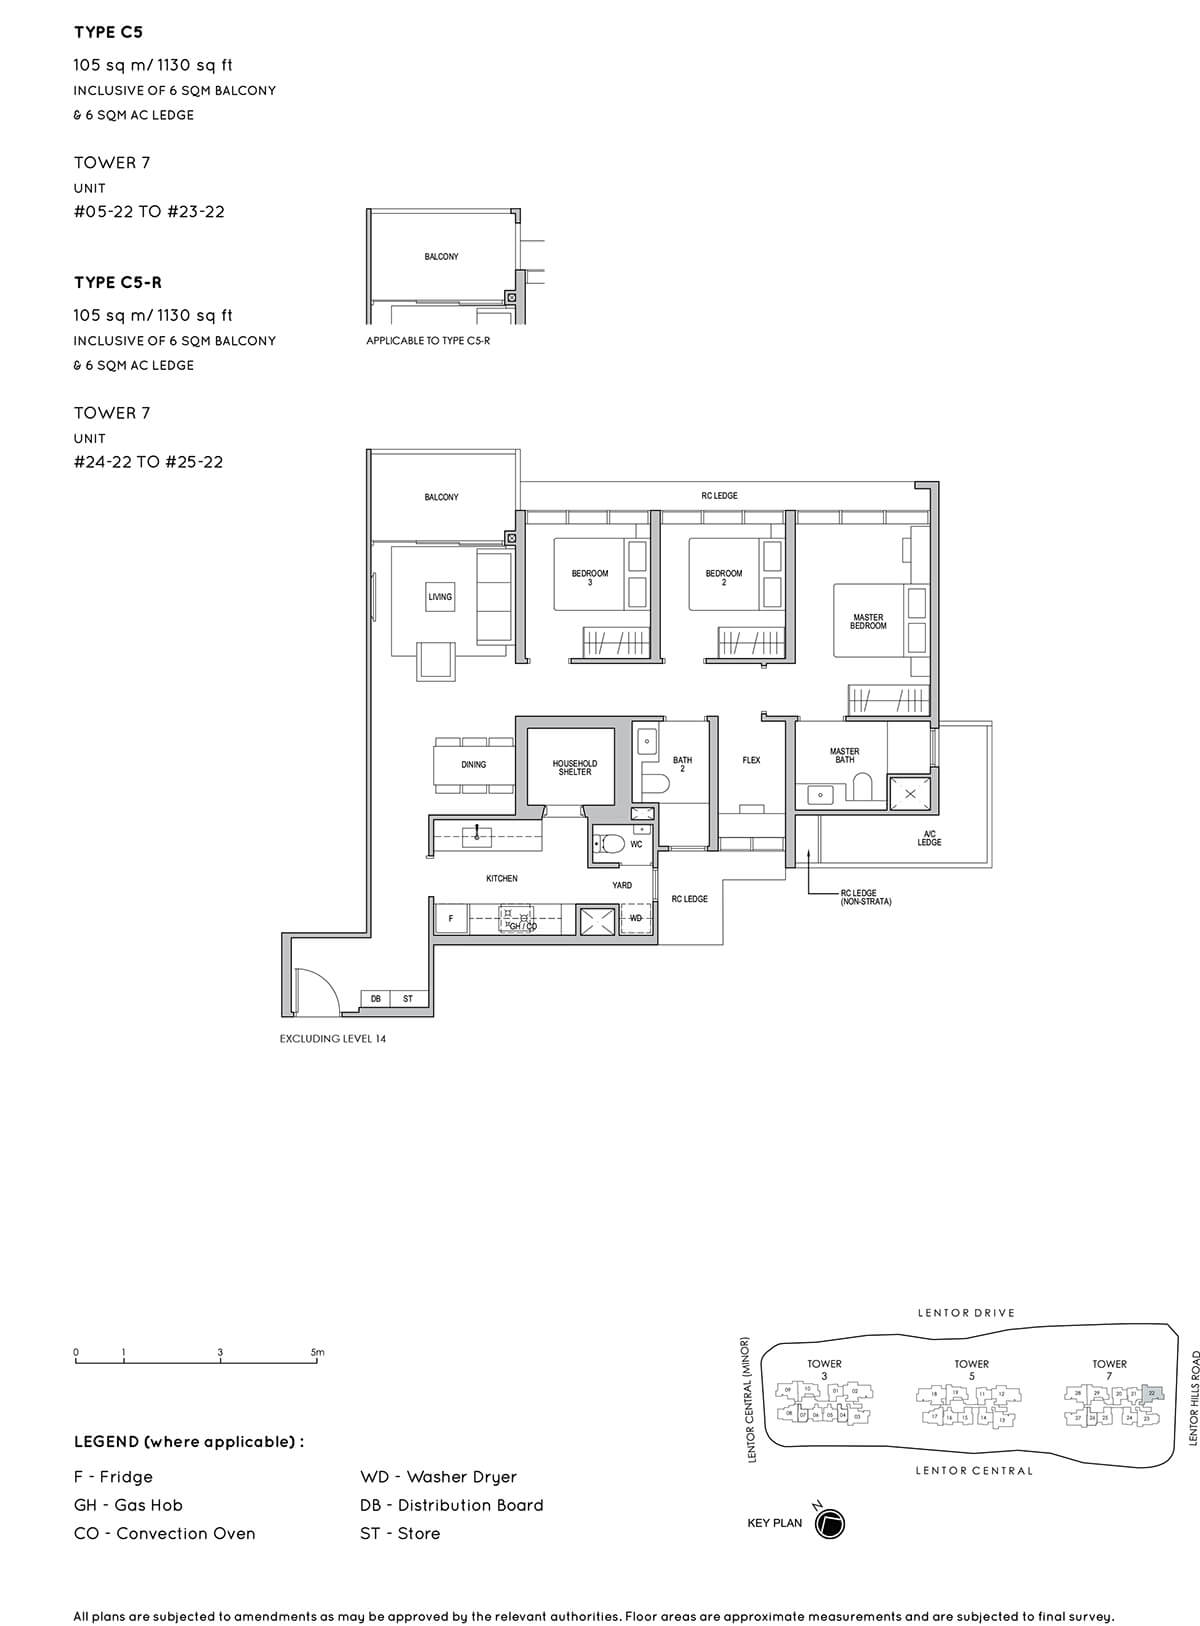 Lentor Modern 3-Bedroom Floorplan Type C5